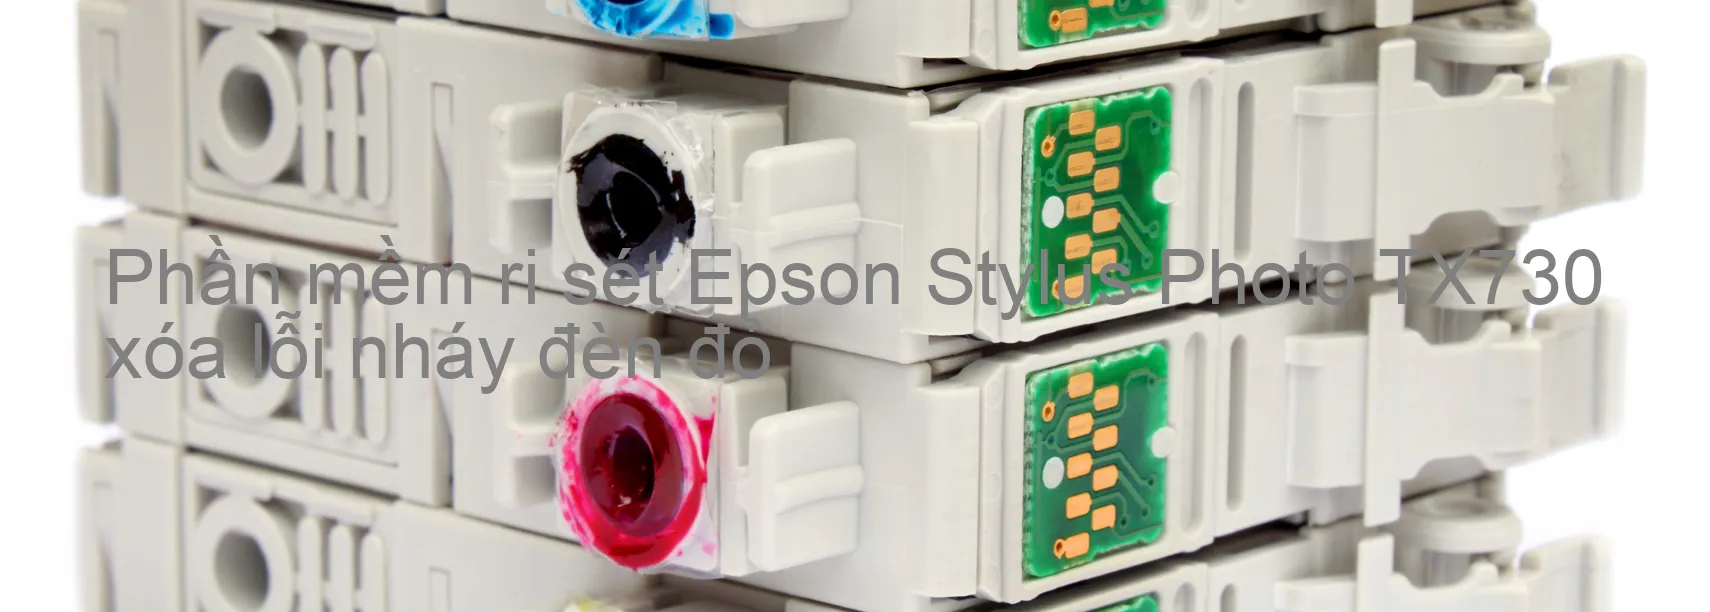 Phần mềm reset Epson Stylus Photo TX730 xóa lỗi nháy đèn đỏ